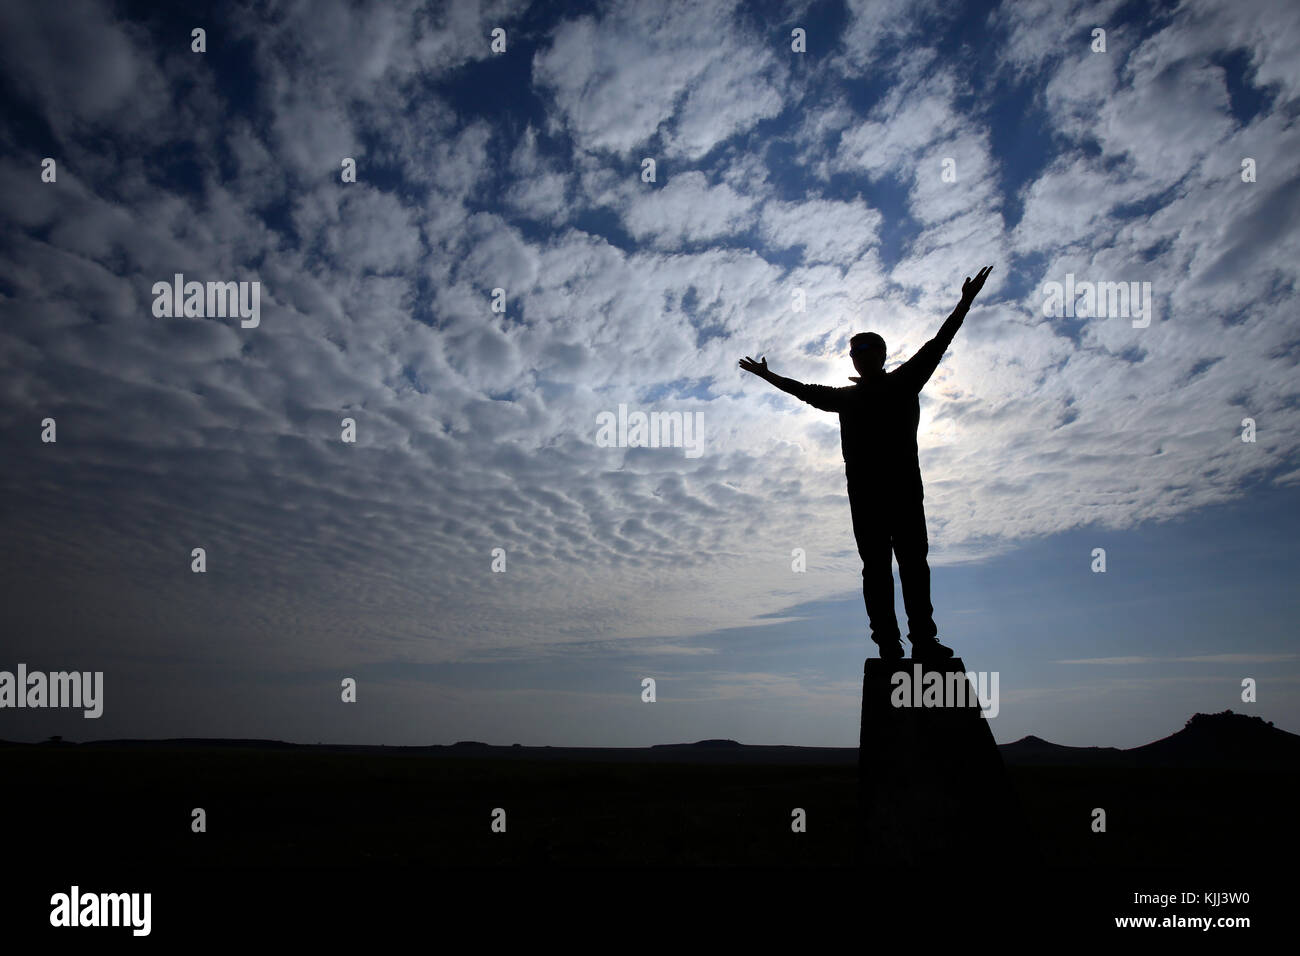 Mann mit erhobenen Armen beten gegen bewölkten Himmel. Silhouette. Stockfoto